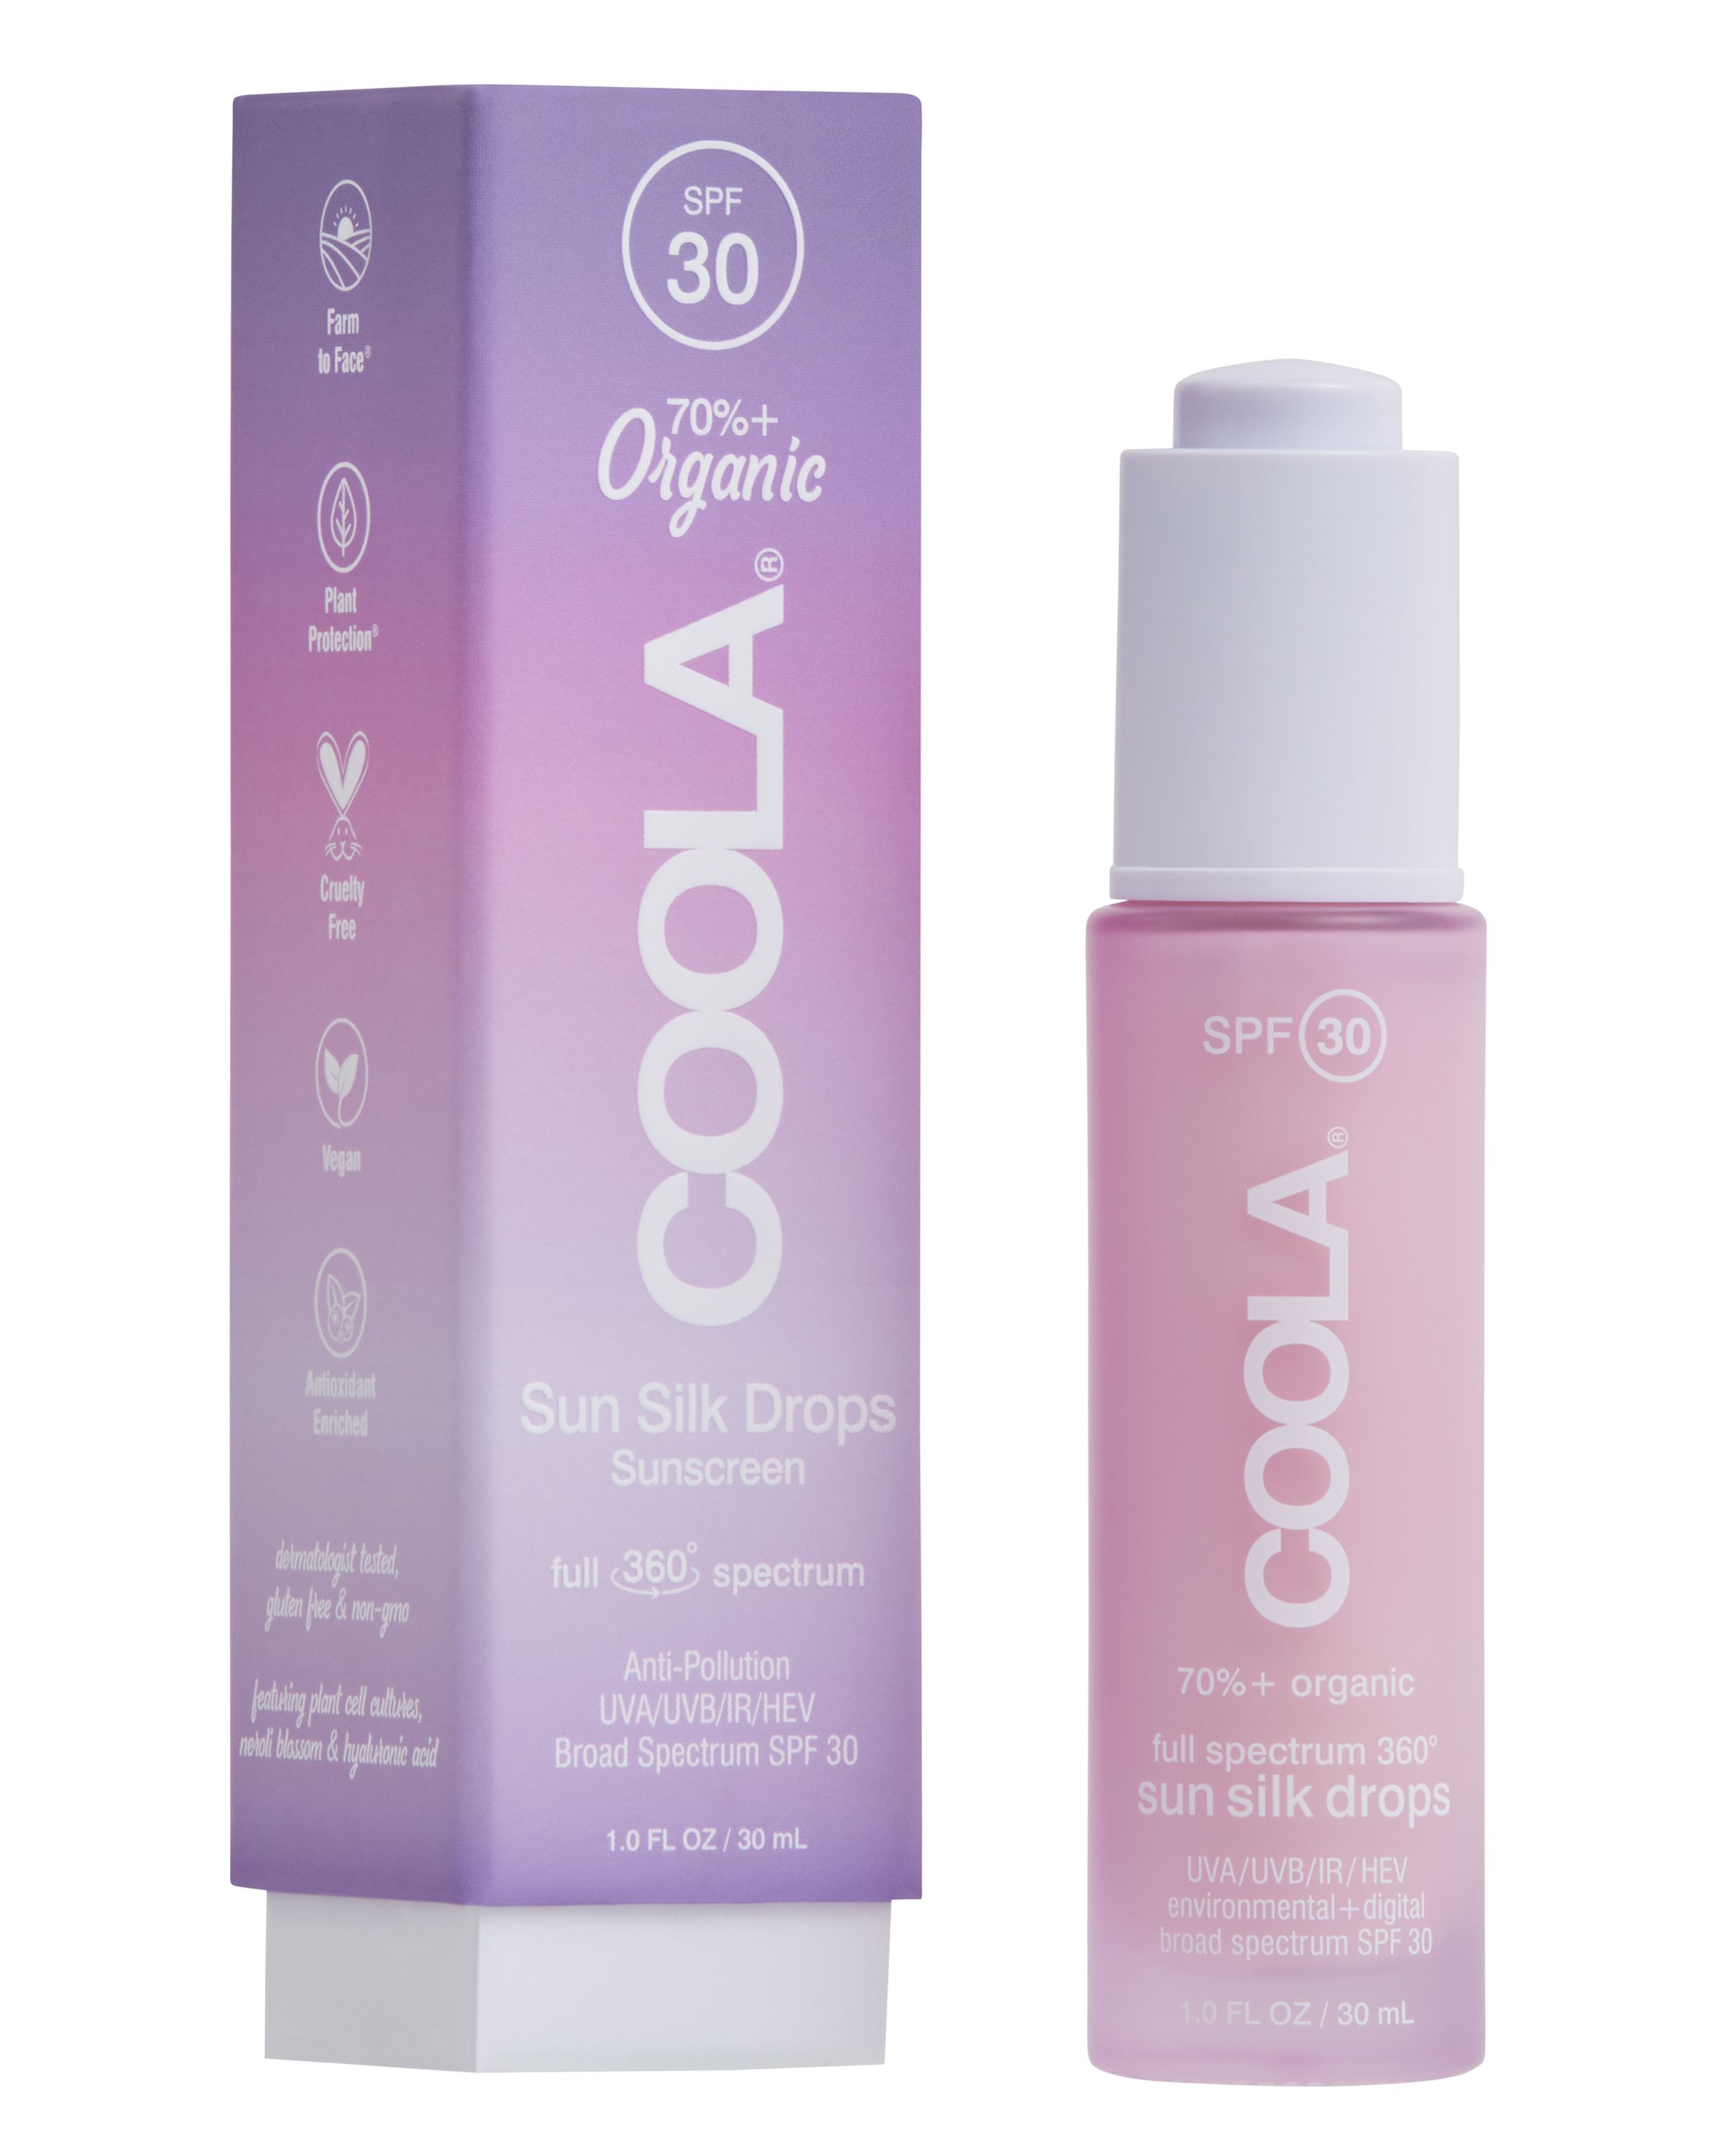 DISCCOOLA Full Spectrum 360° Sun Silk Drops Organic Face Sunscreen, SPF 30 -  1 fl oz